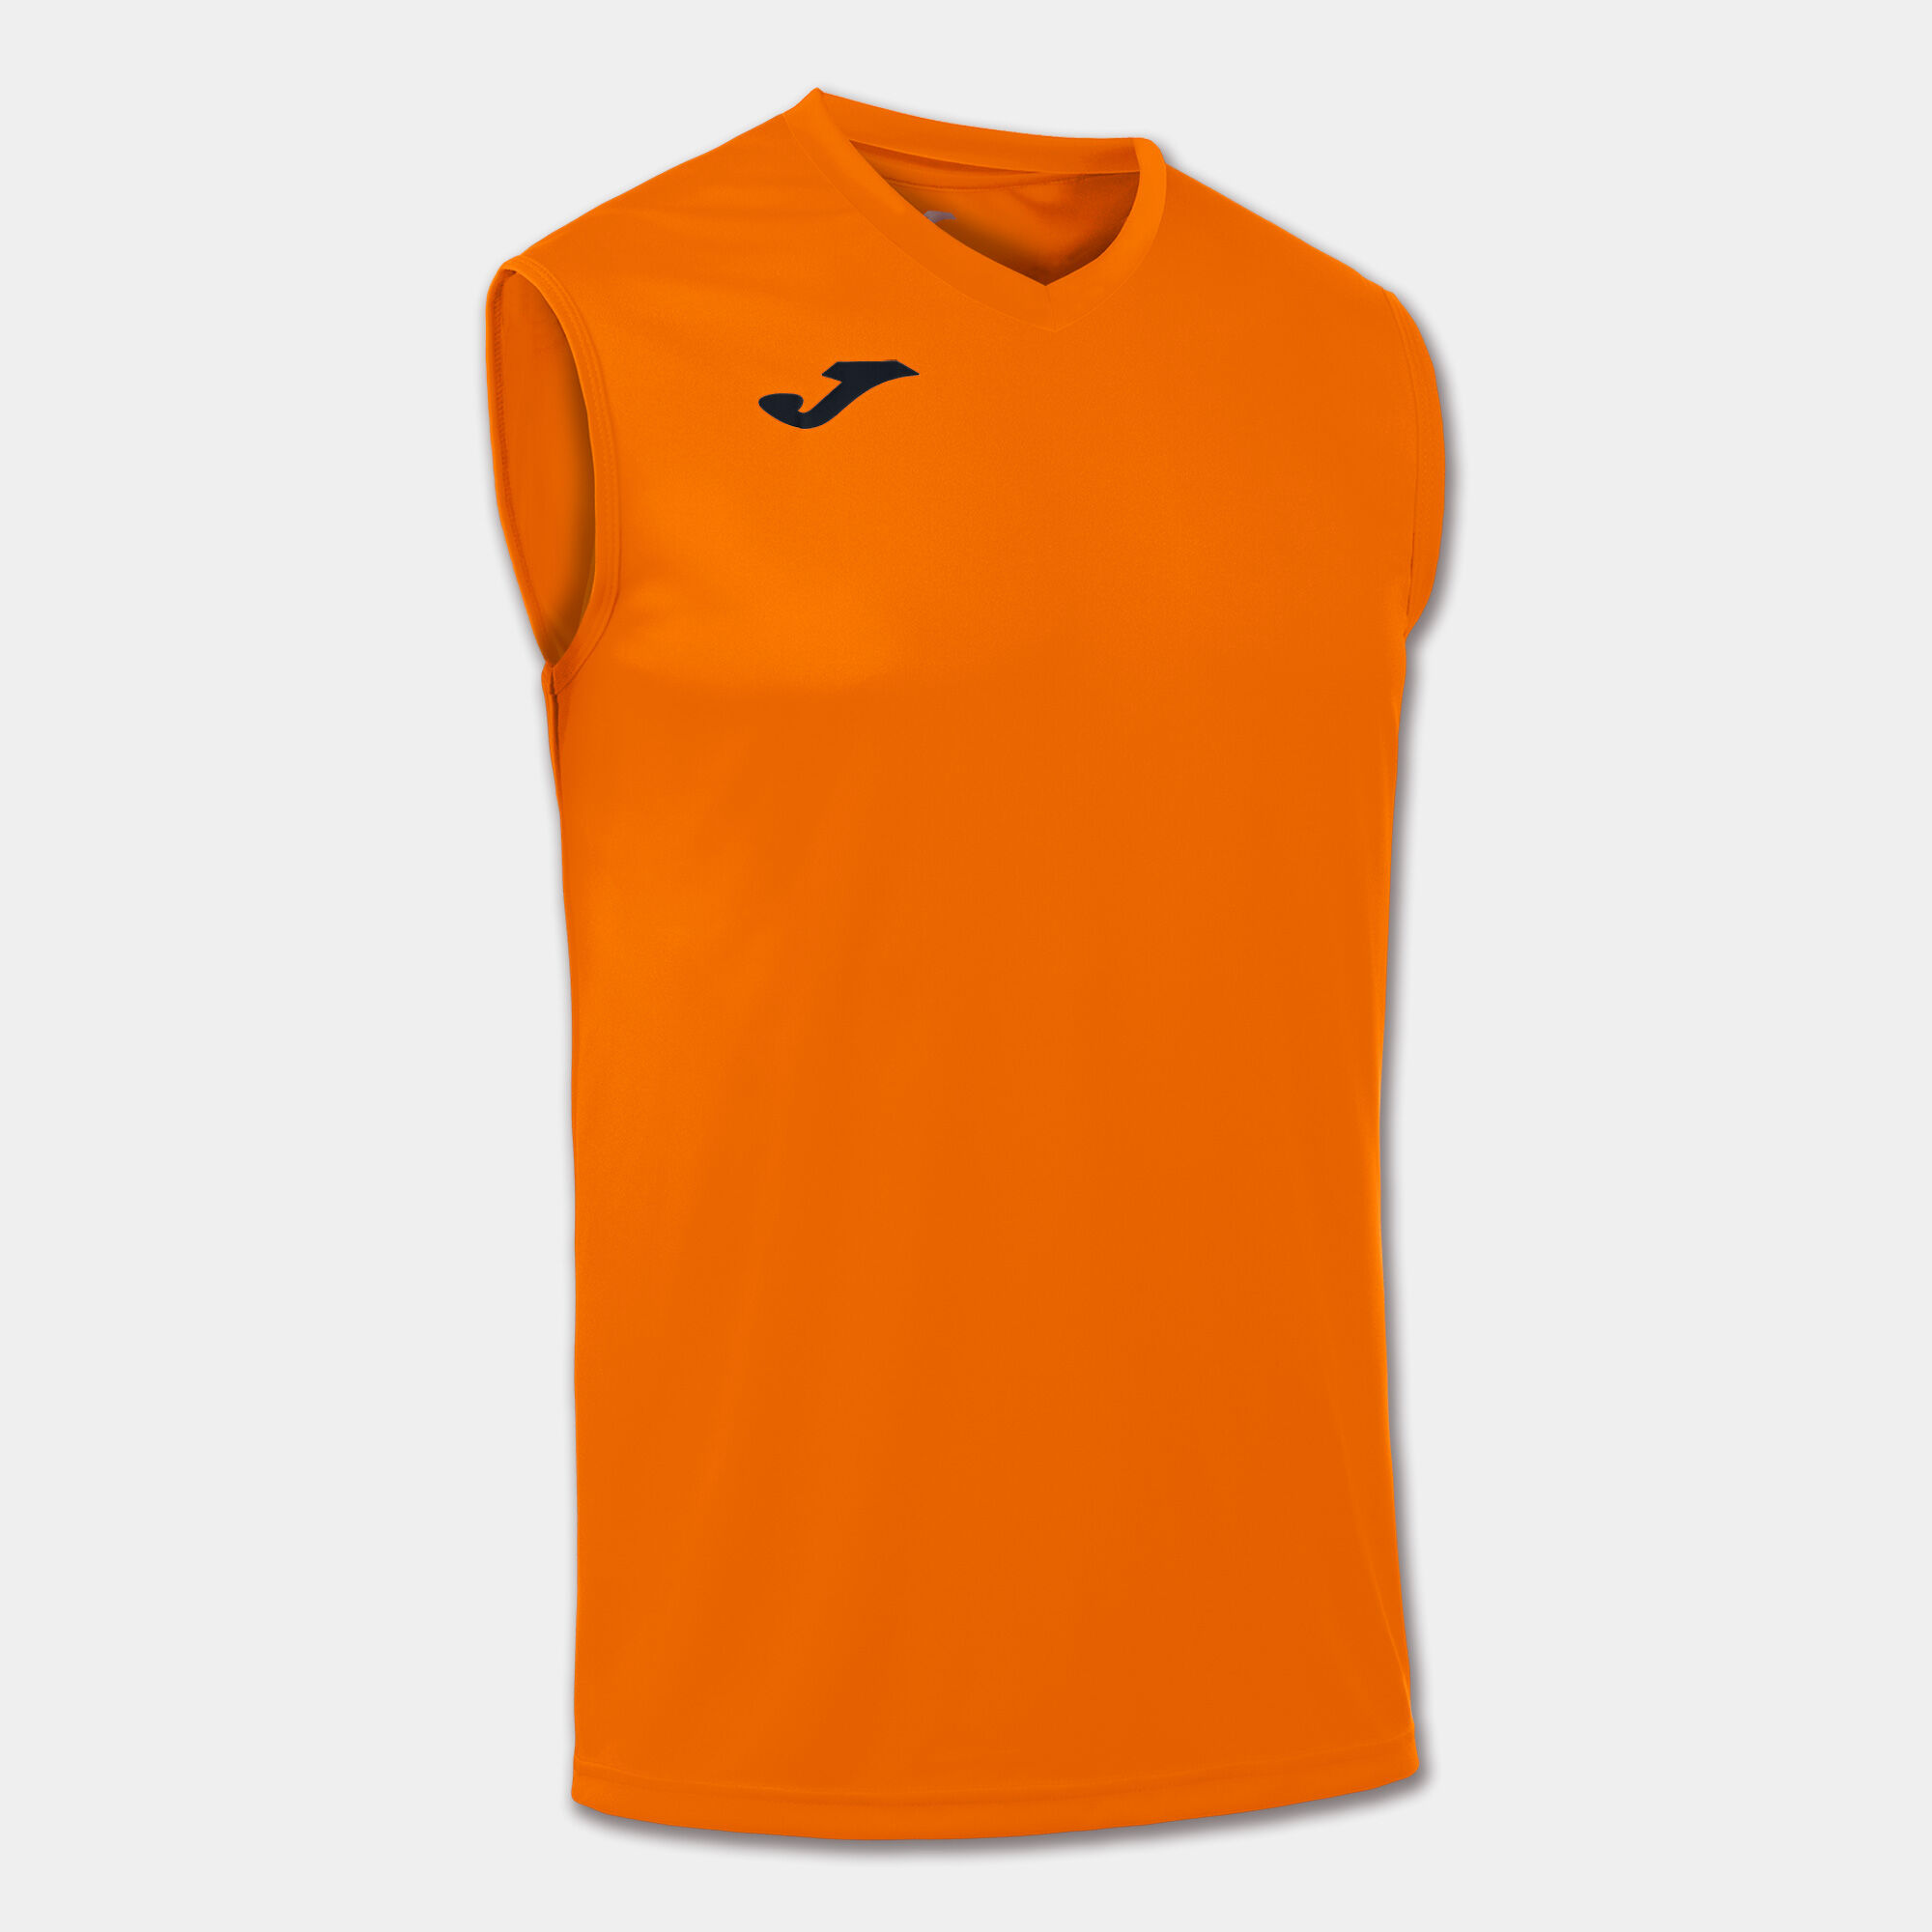 Camiseta sin mangas hombre Combi naranja